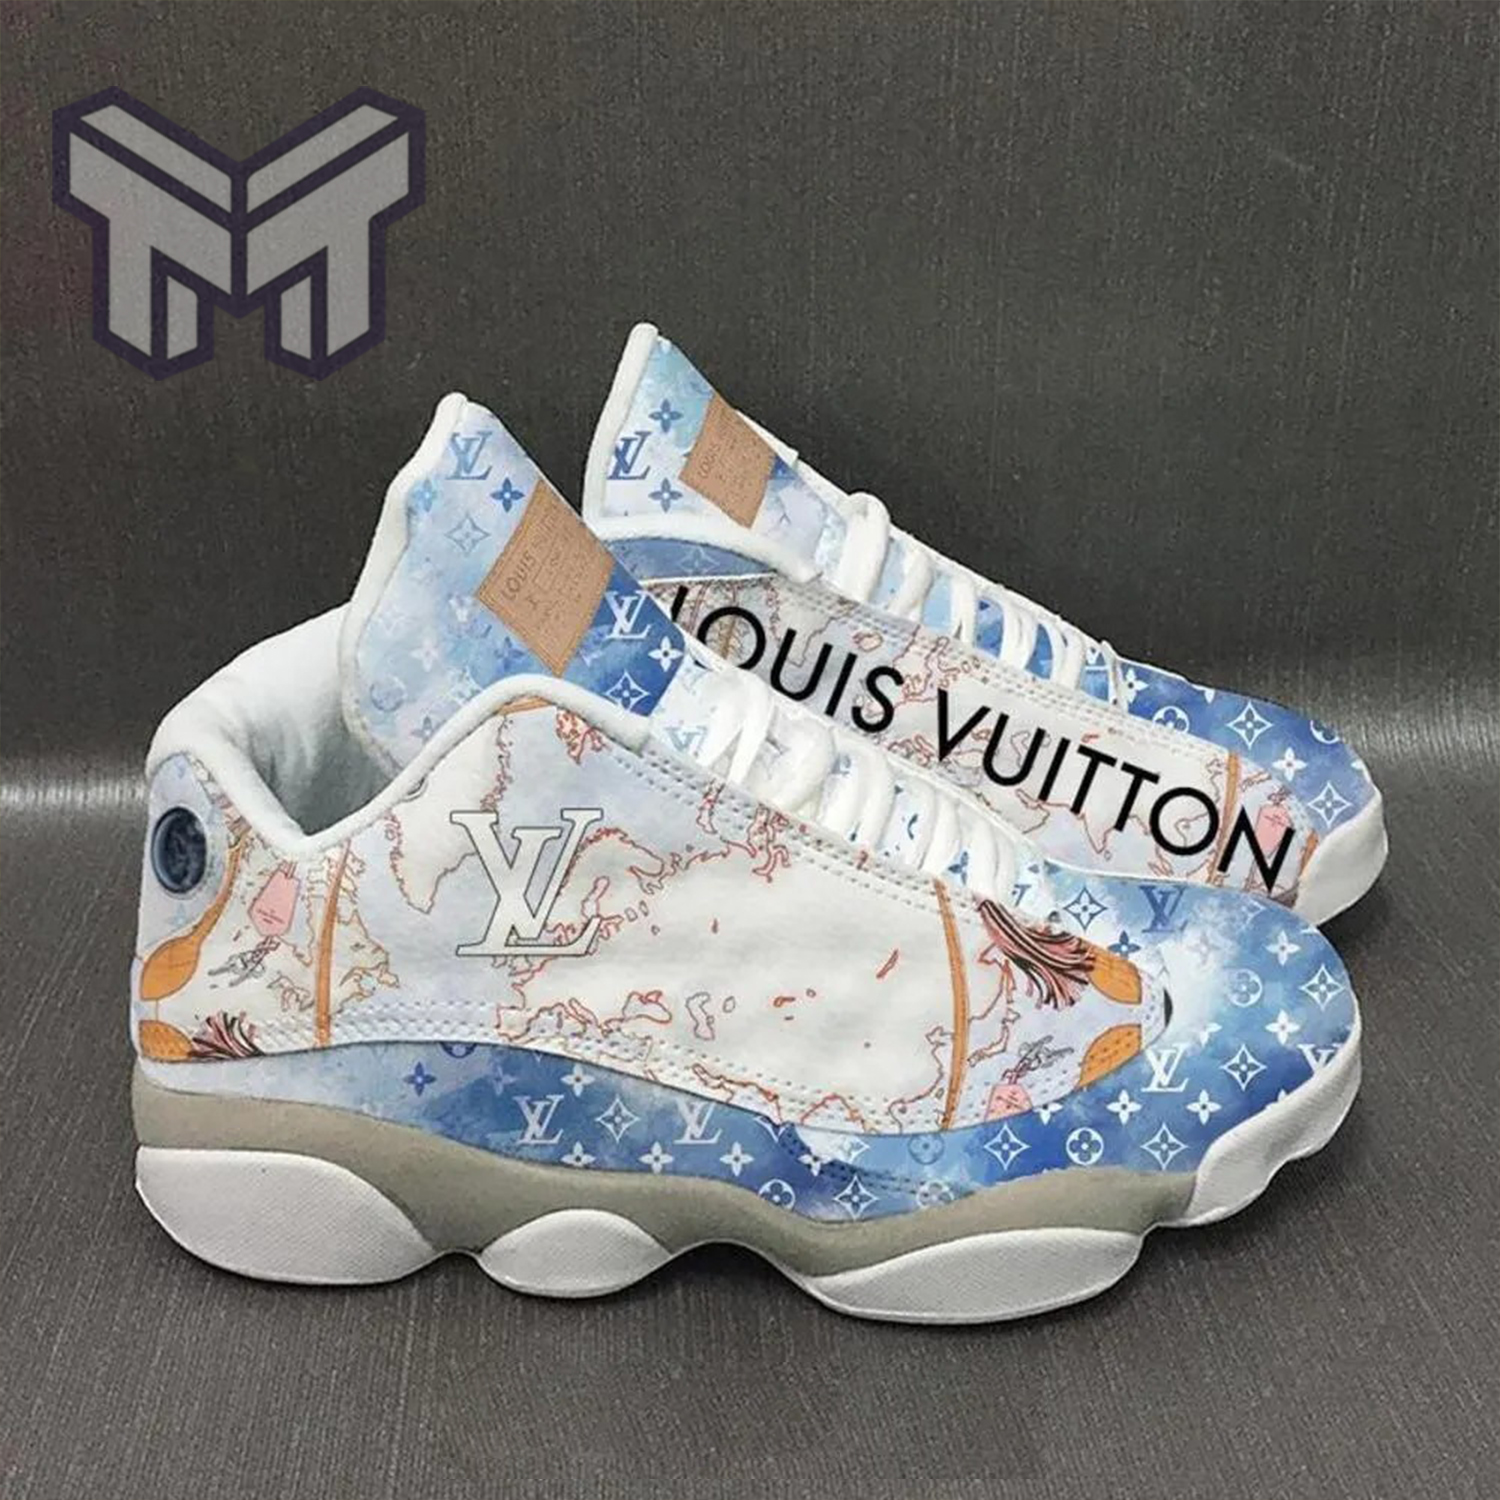 Louis Vuitton Blue air jordan 13 sneaker shoes#airjordan#shoes in